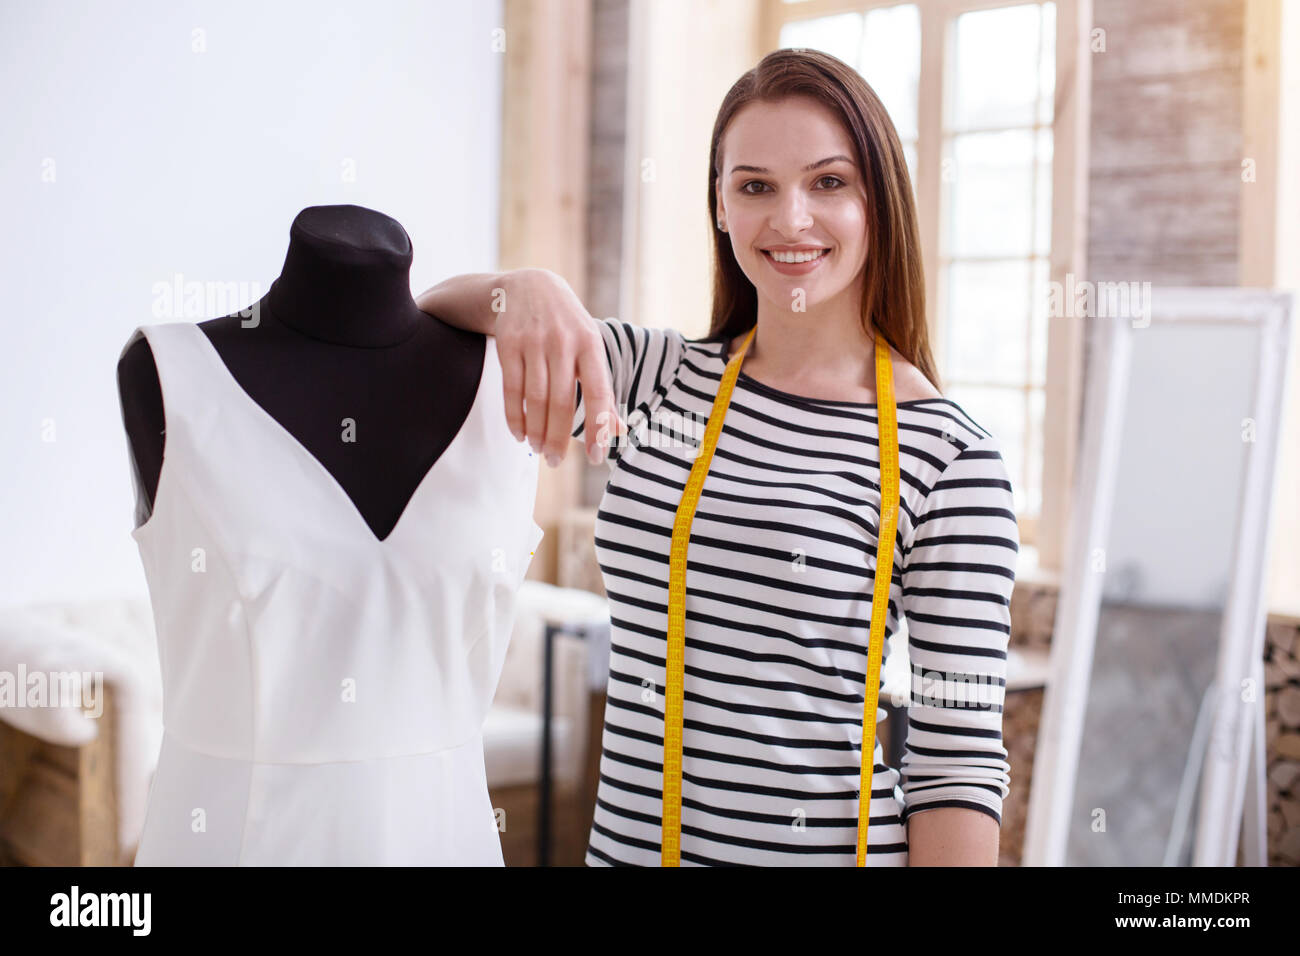 Confident female dressmaker showing dress Stock Photo